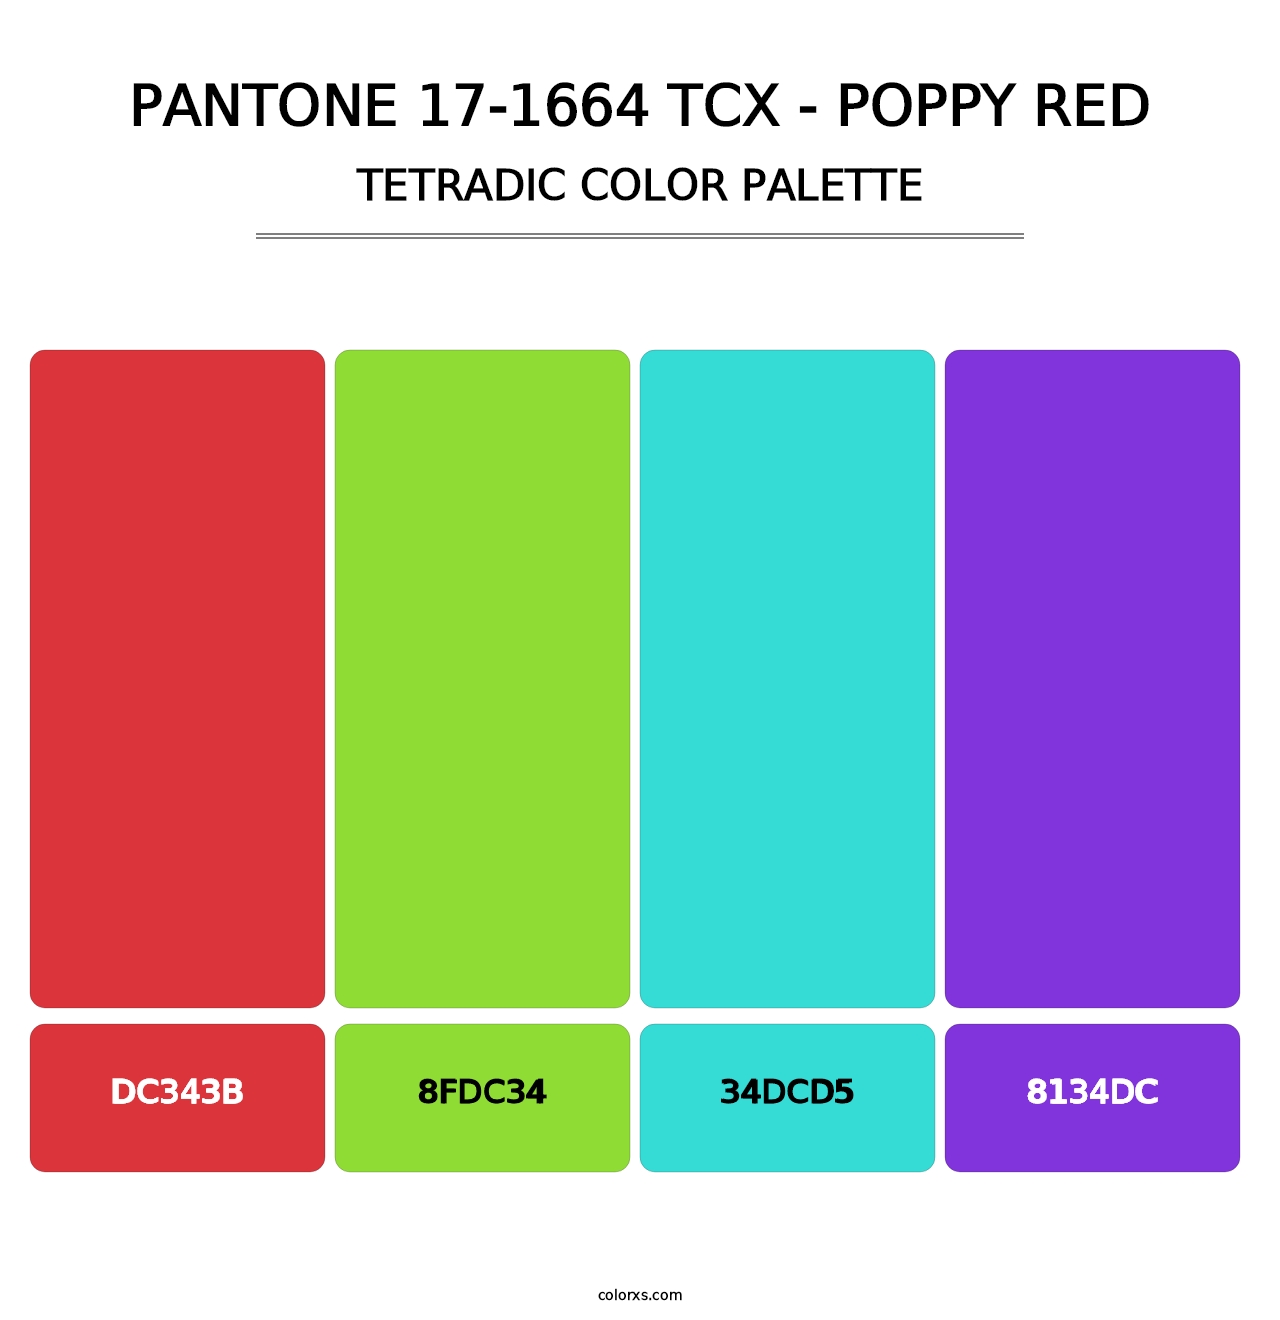 PANTONE 17-1664 TCX - Poppy Red - Tetradic Color Palette